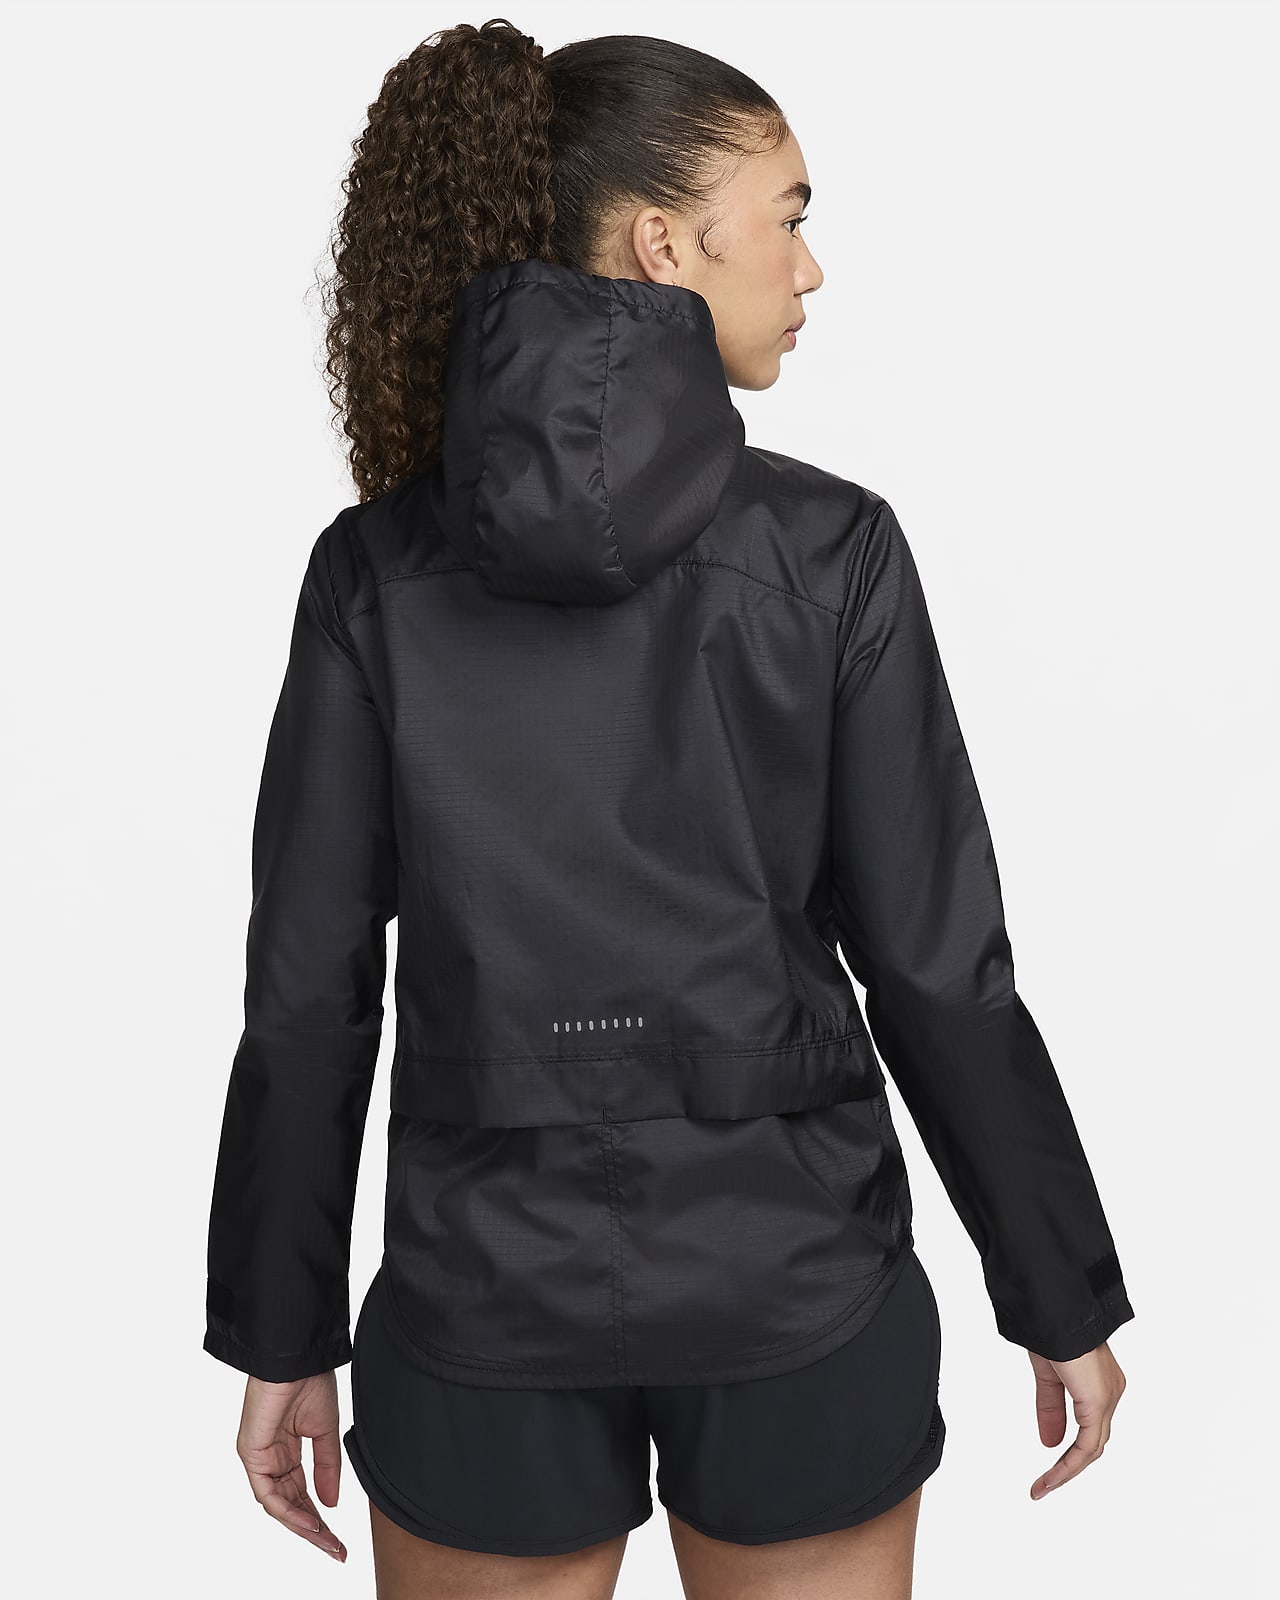 nike womens running jacket black